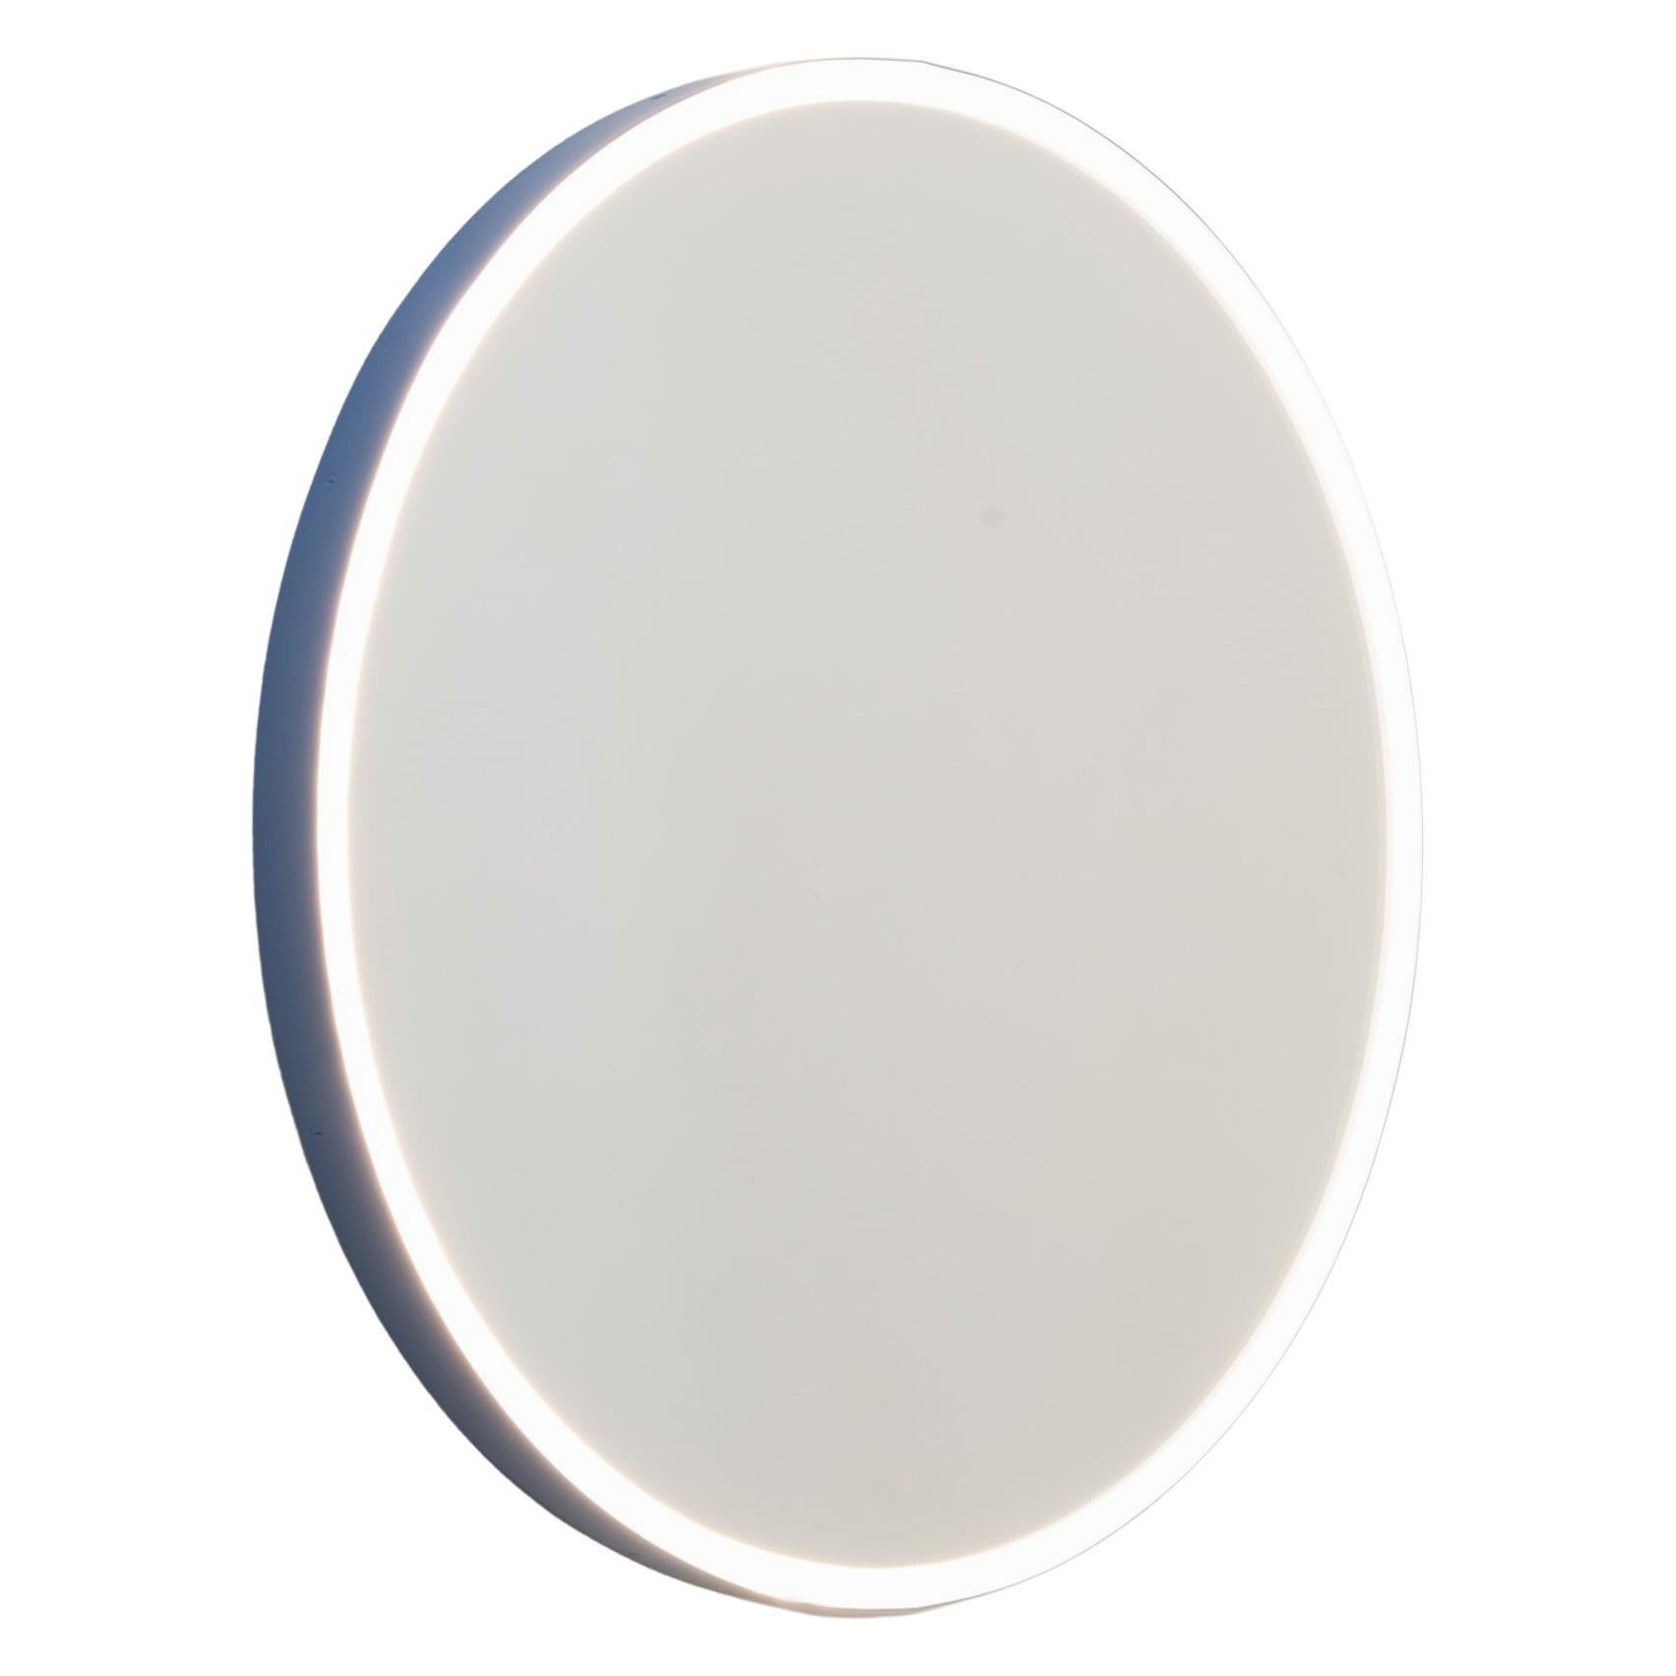 Orbis Front Illuminated Round Bespoke Modern Mirror with Blue Frame, Regular For Sale